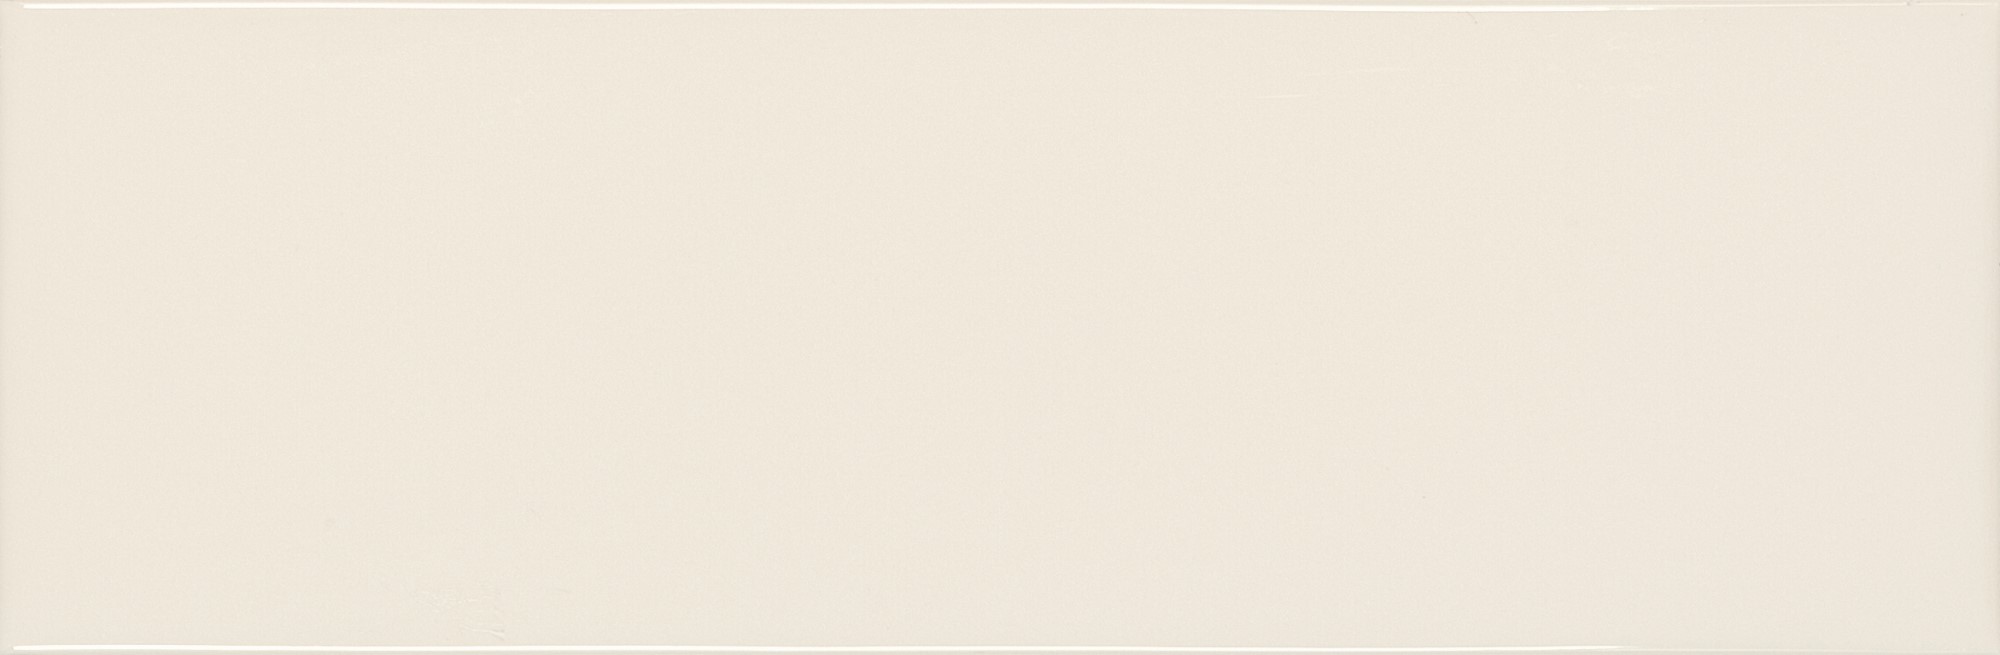 NEGROS Wandfliesen 10x30cm Weiß glänzend